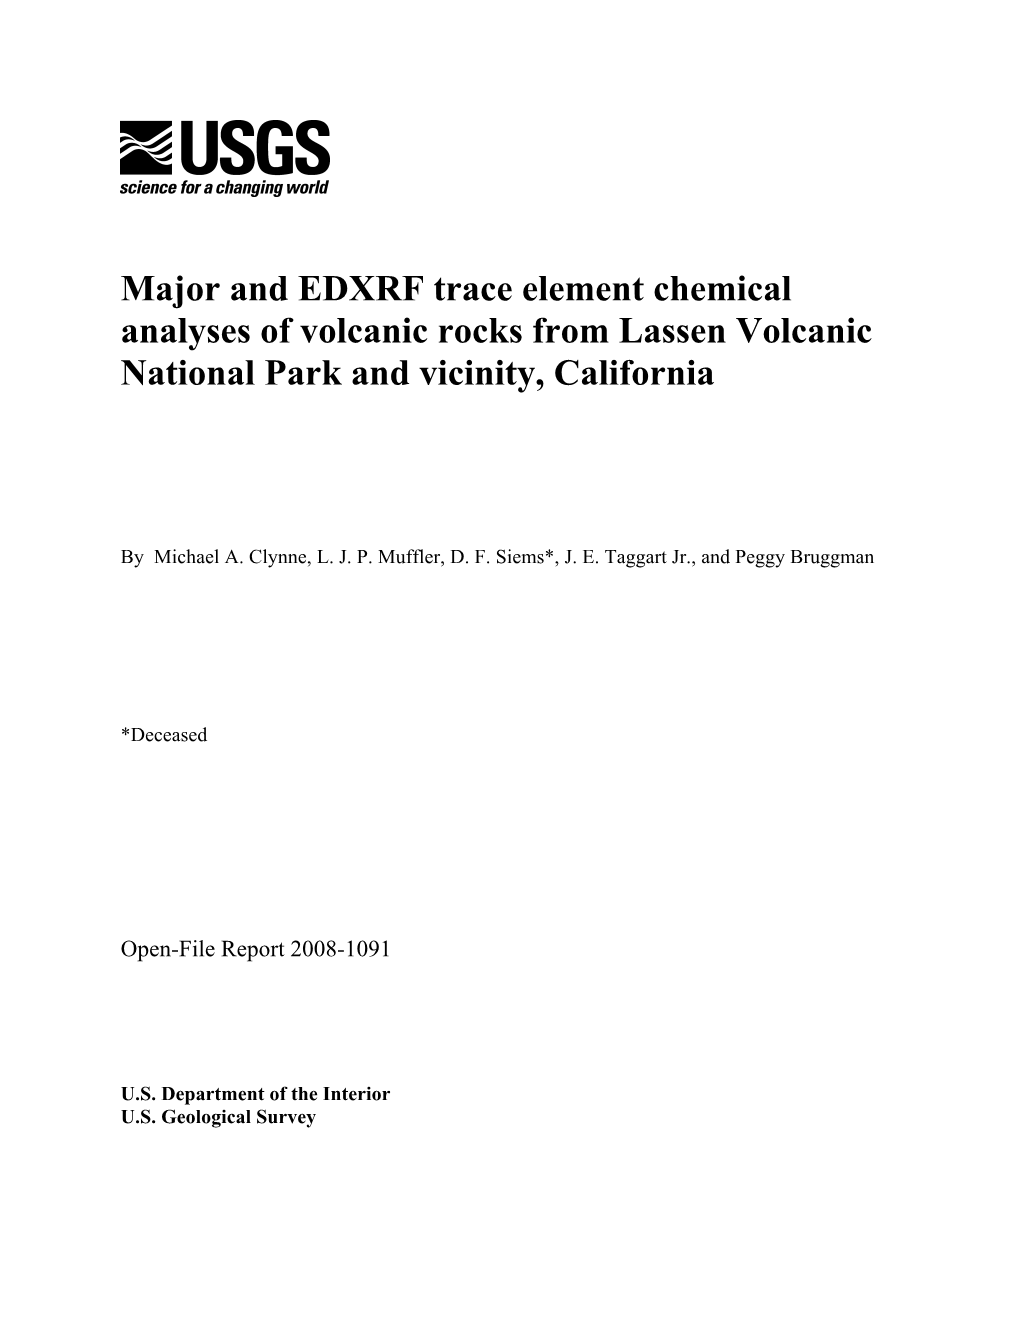 Major Element Chemical Analyses of Volcanic Rocks from Lassen